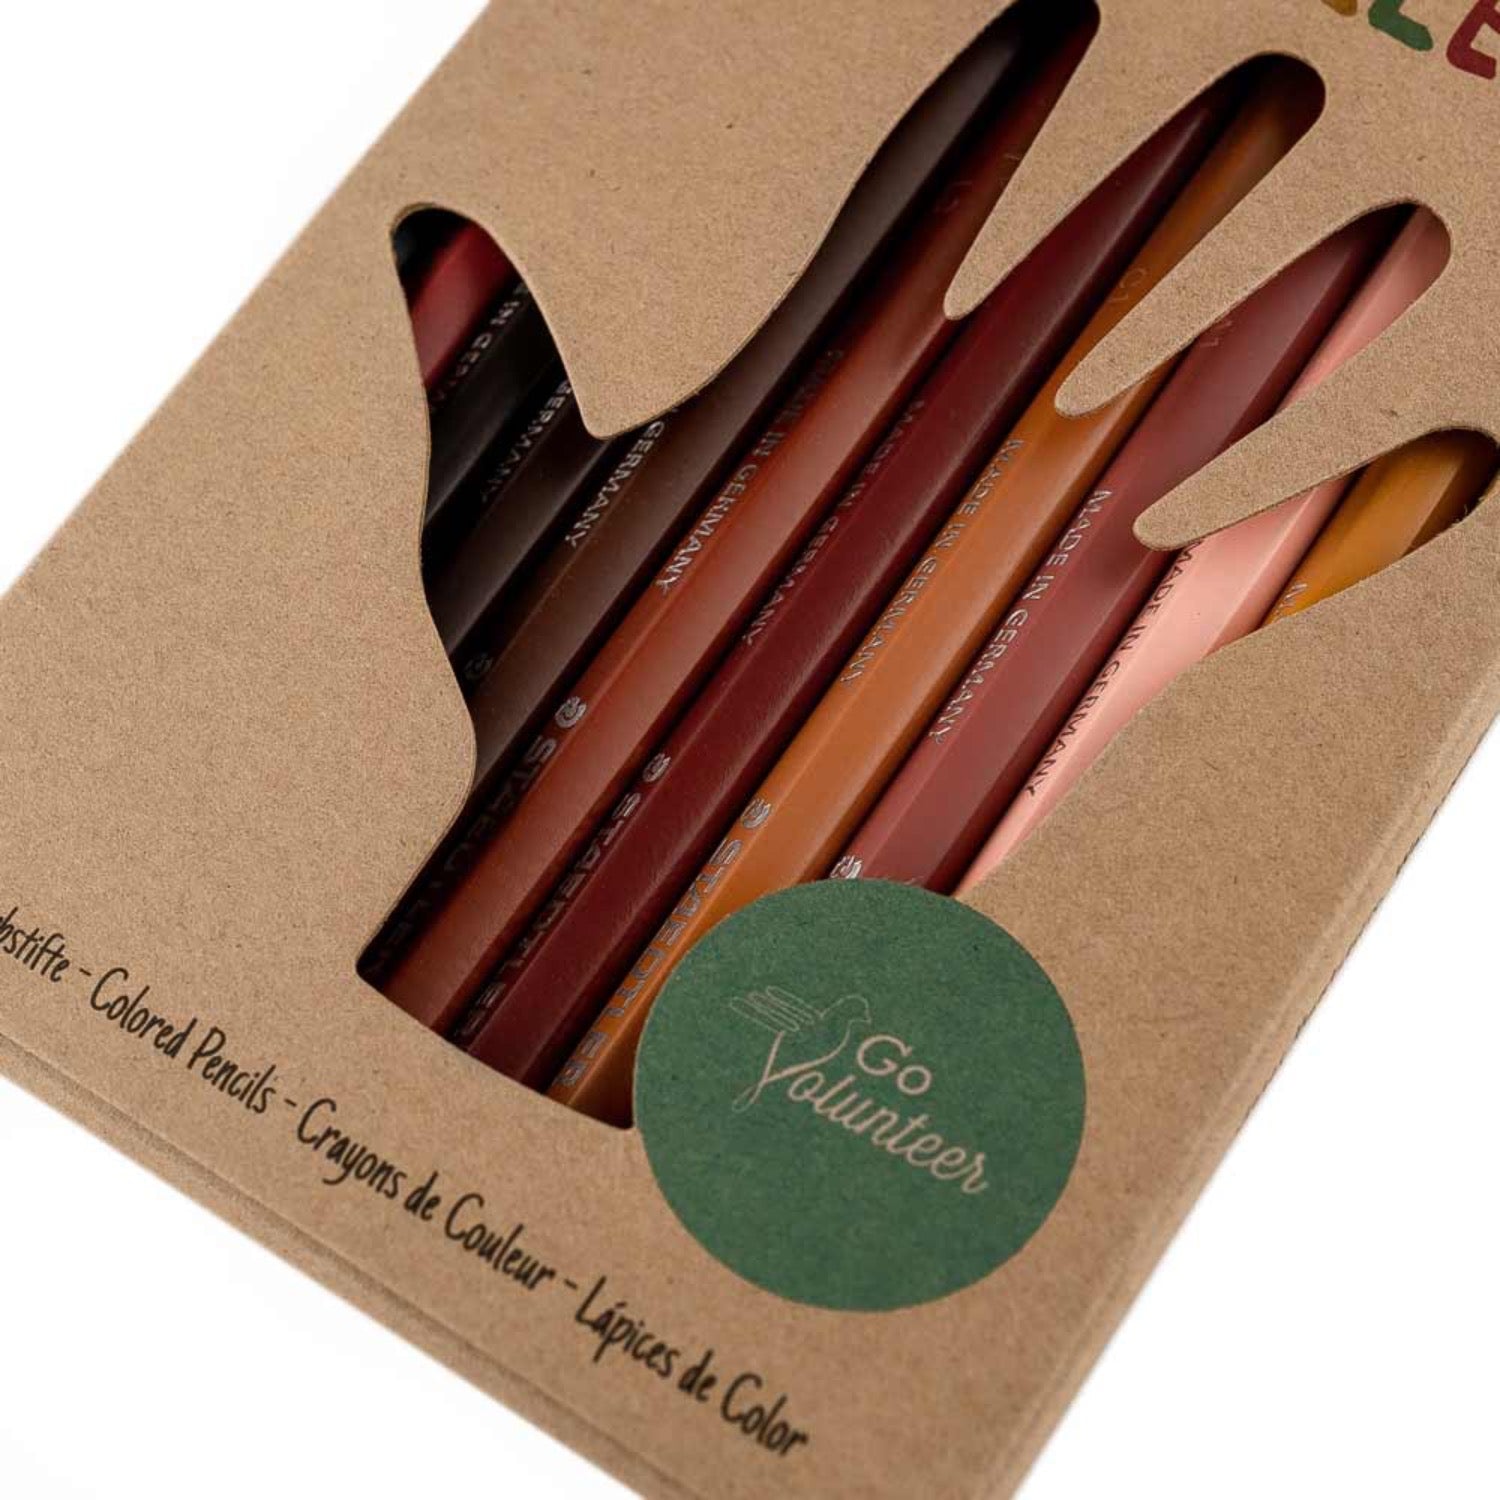 Skin toned colouring pencils